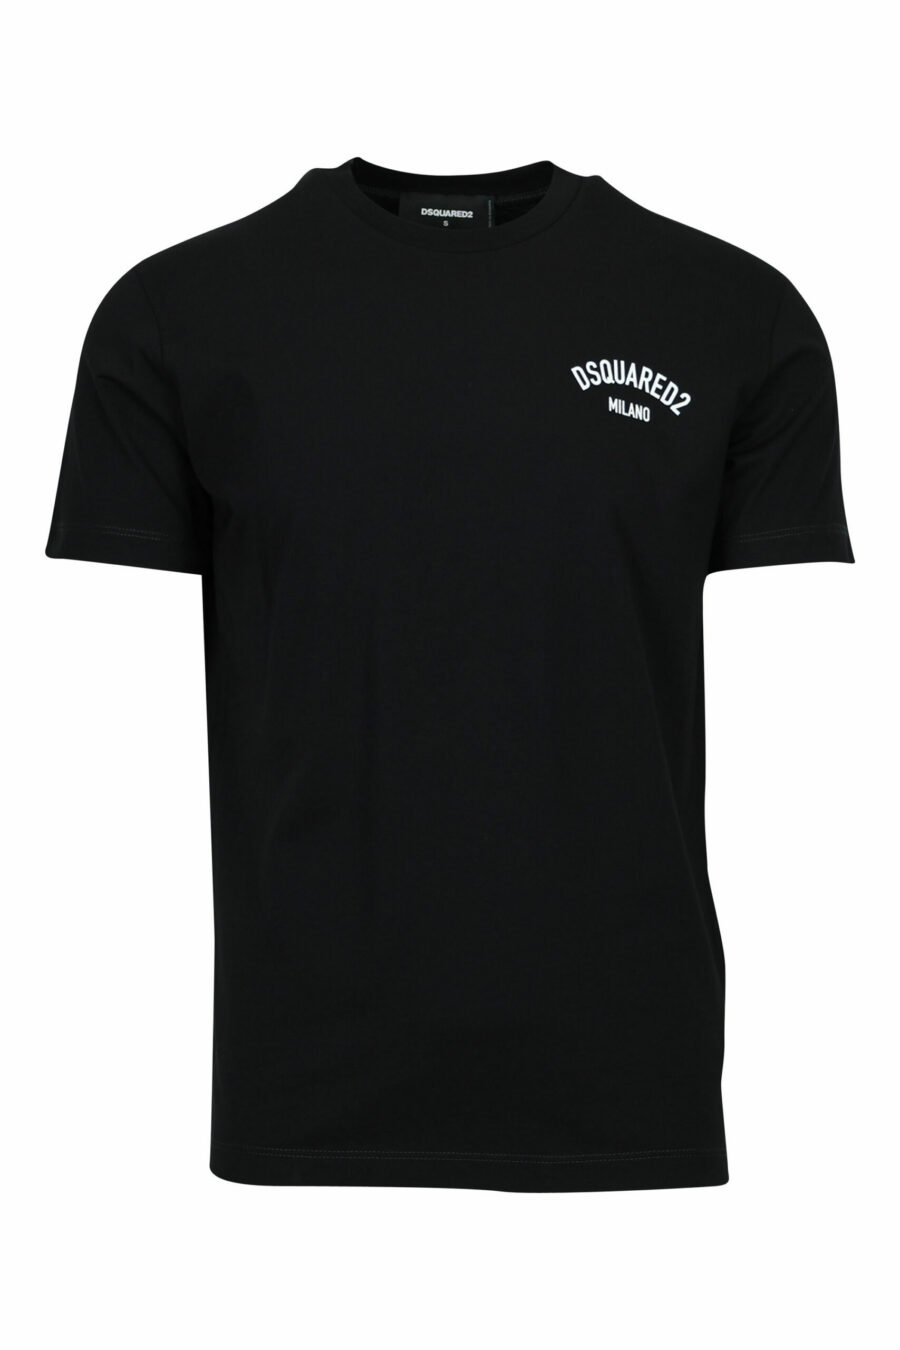 Camiseta negra con logo doblado "milano" - 8054148571047 scaled